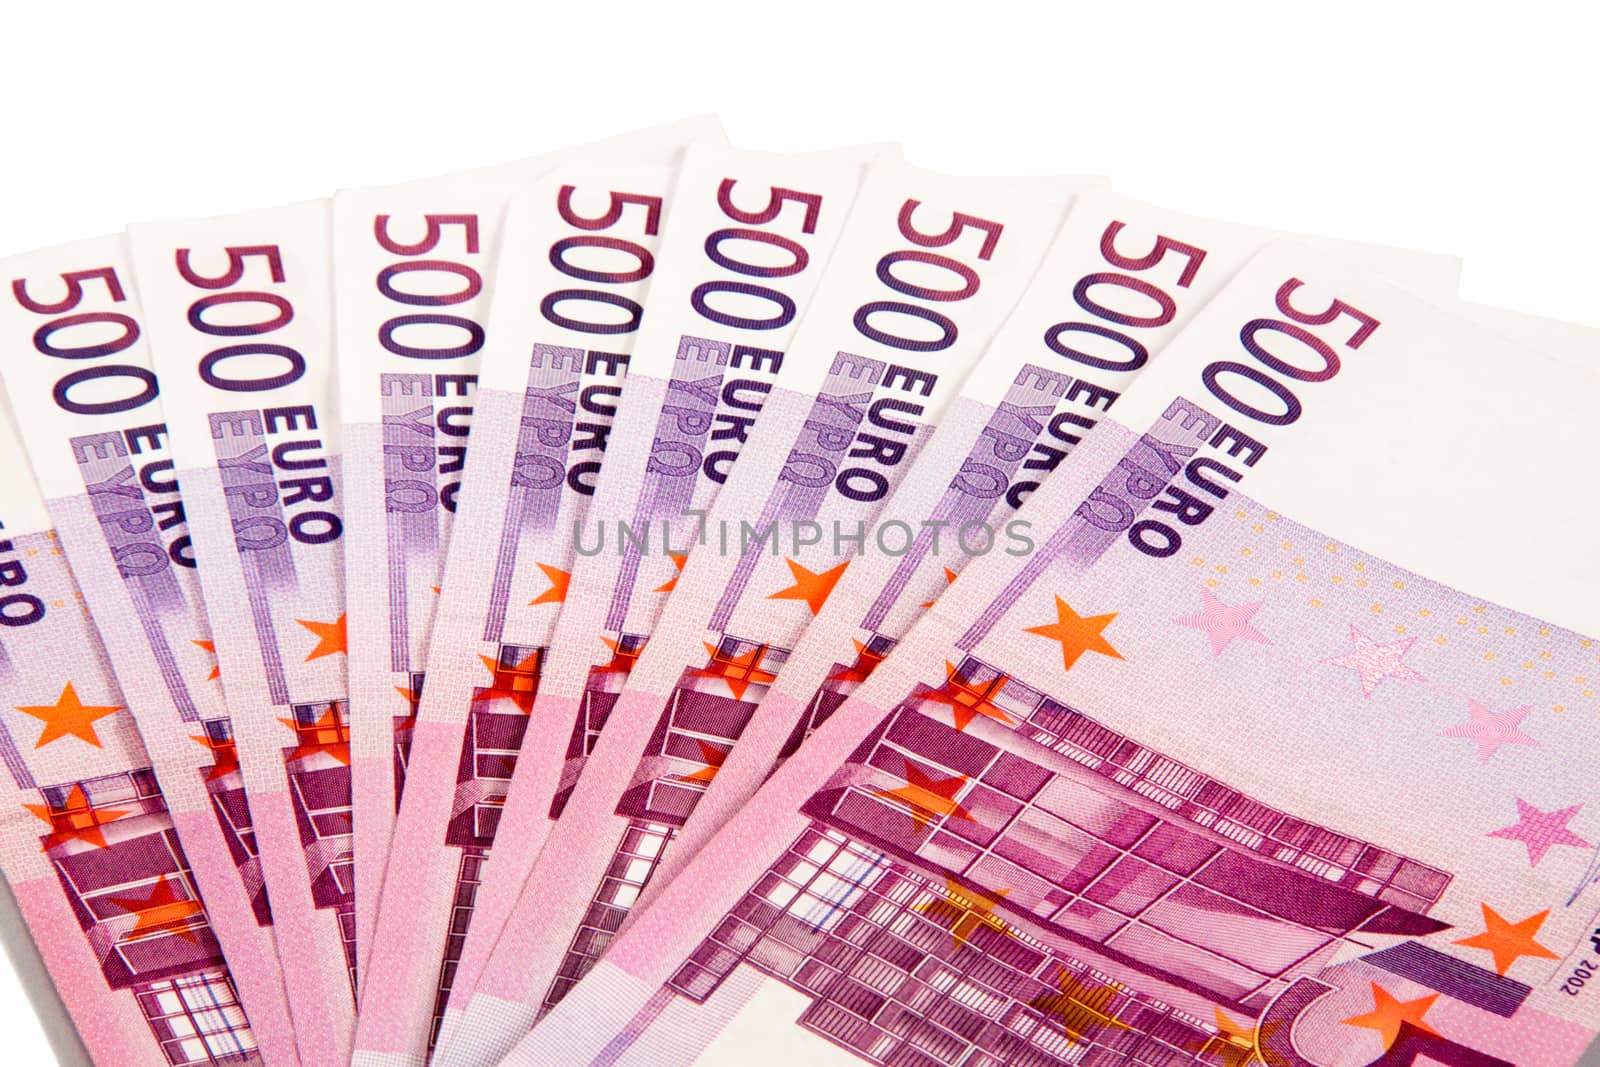  500 euros lie a fan on a white background